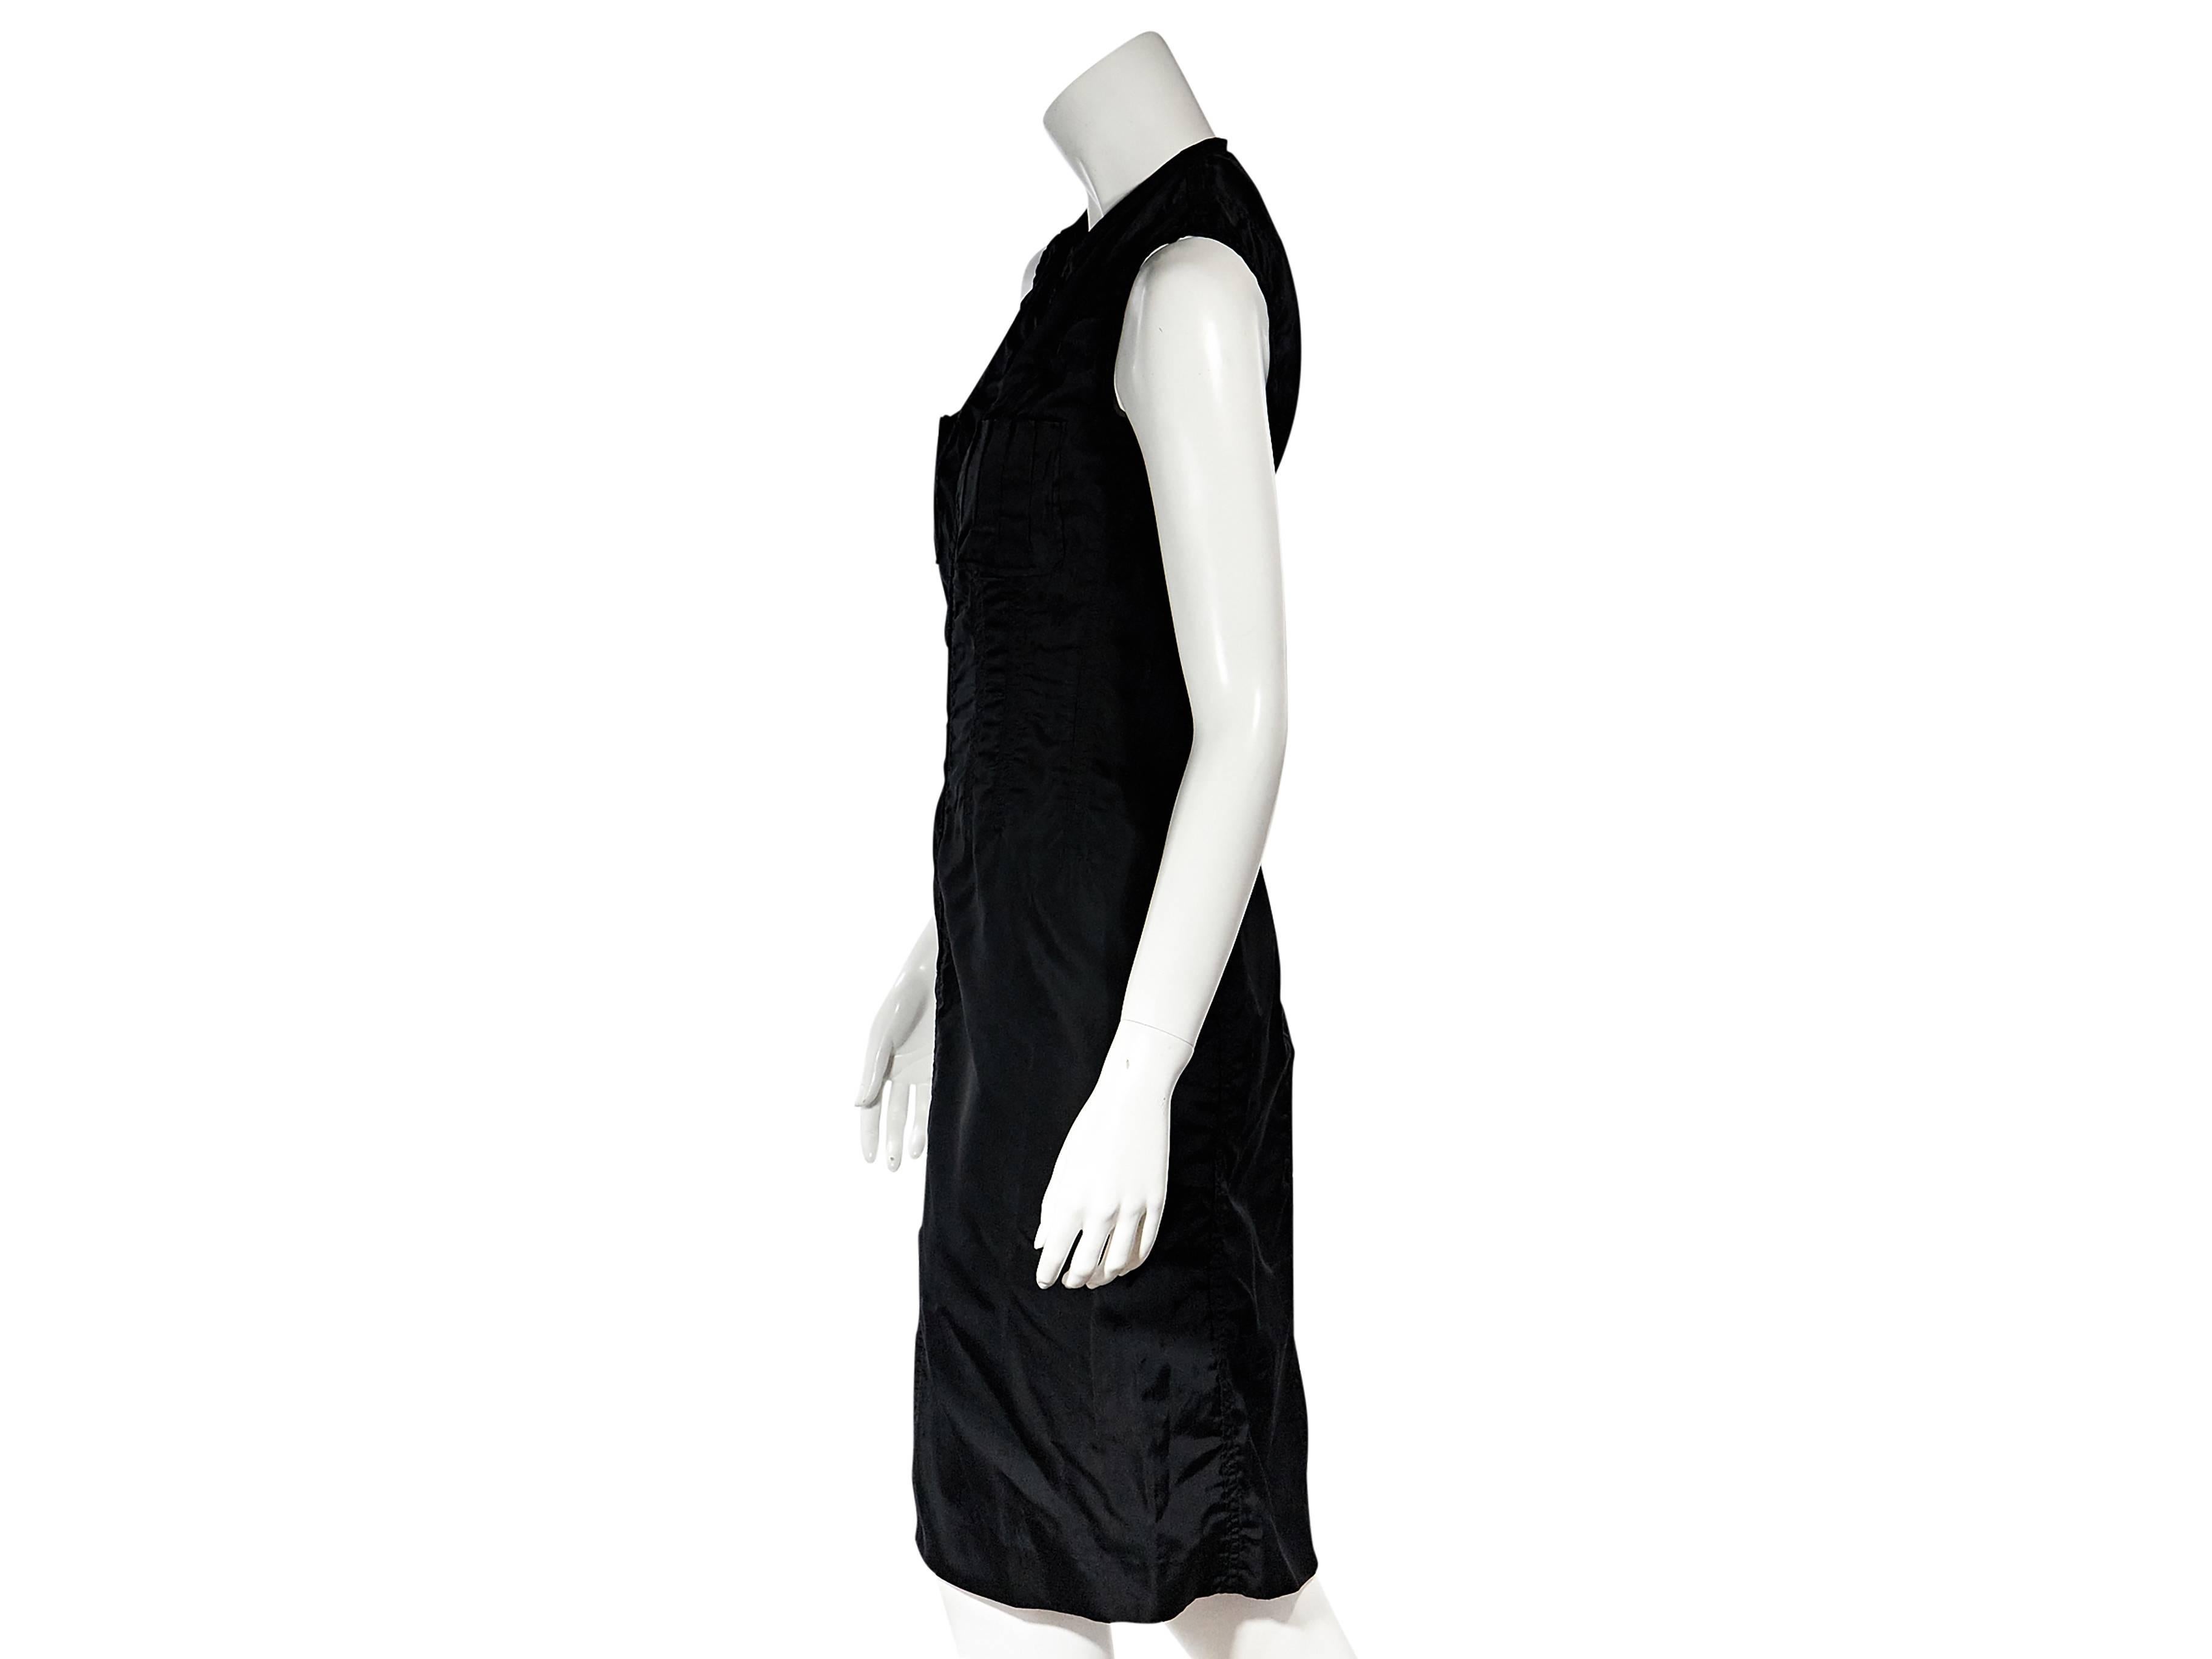 Product details: Black silk sheath dress by Yves Saint Laurent. Crewneck. Sleeveless. Concealed hook front closure. Front hem slit. Label size FR 38. 
Condition: Very good. 
Est. Retail $ 580.00